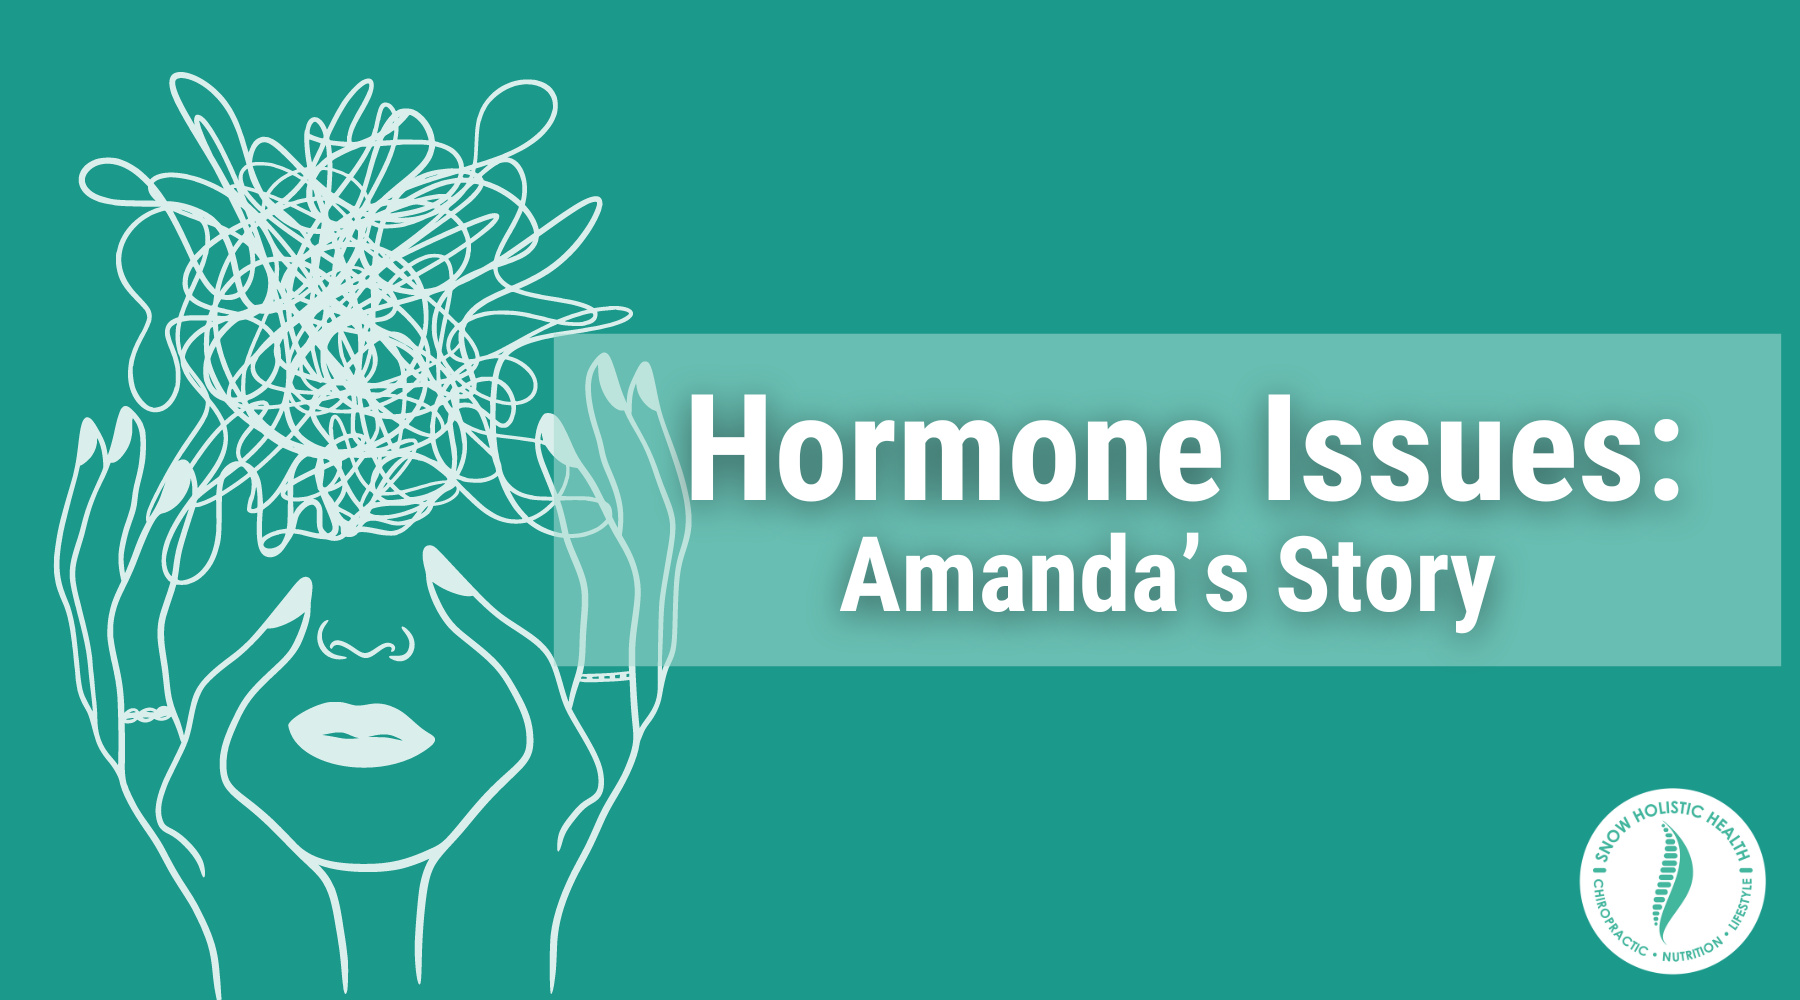 Image with caption "Hormone Issues: Amanda's Story"